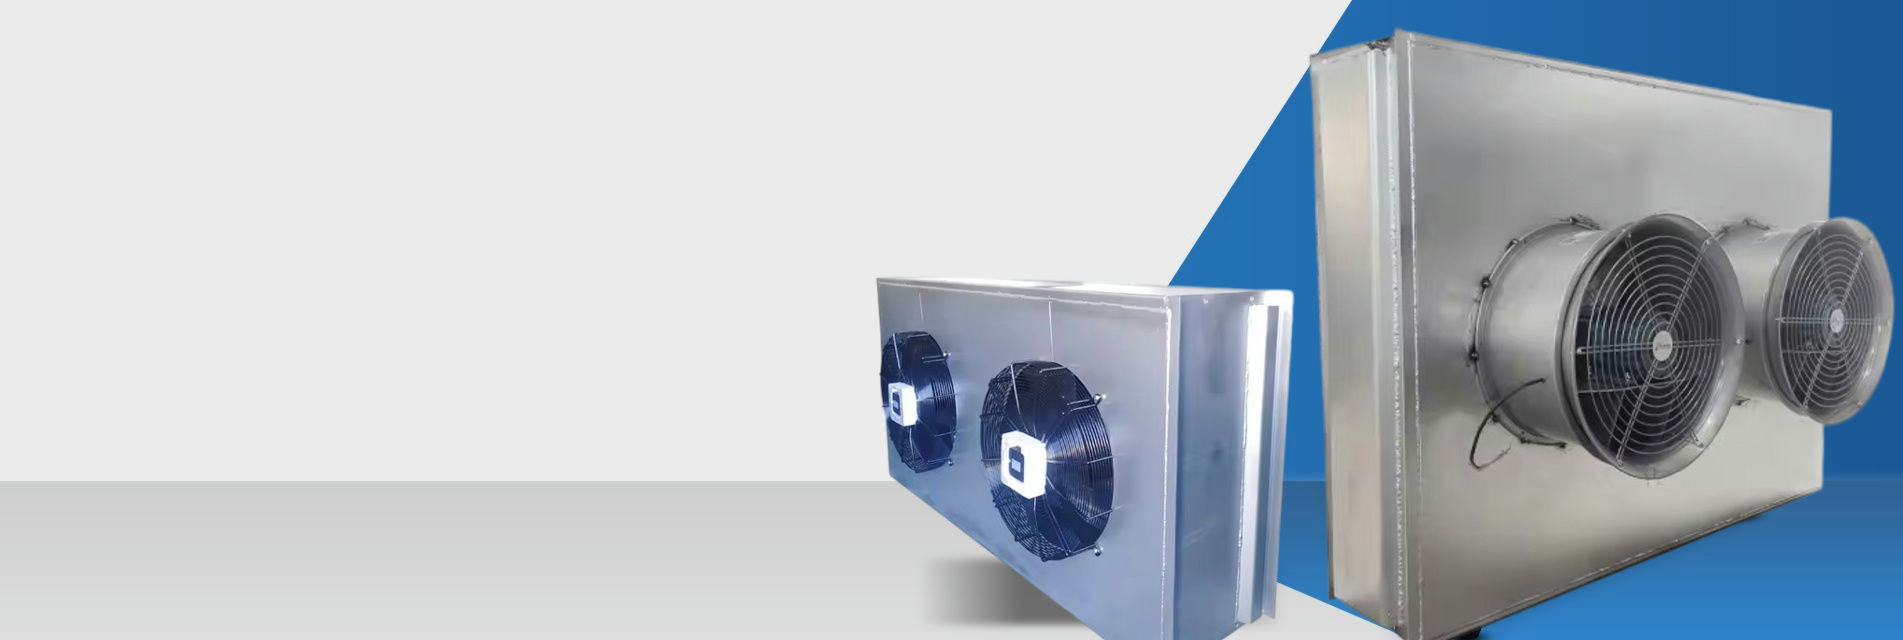 Ventilador axial e intercambiador de calor para fabricar secadora y radiador.